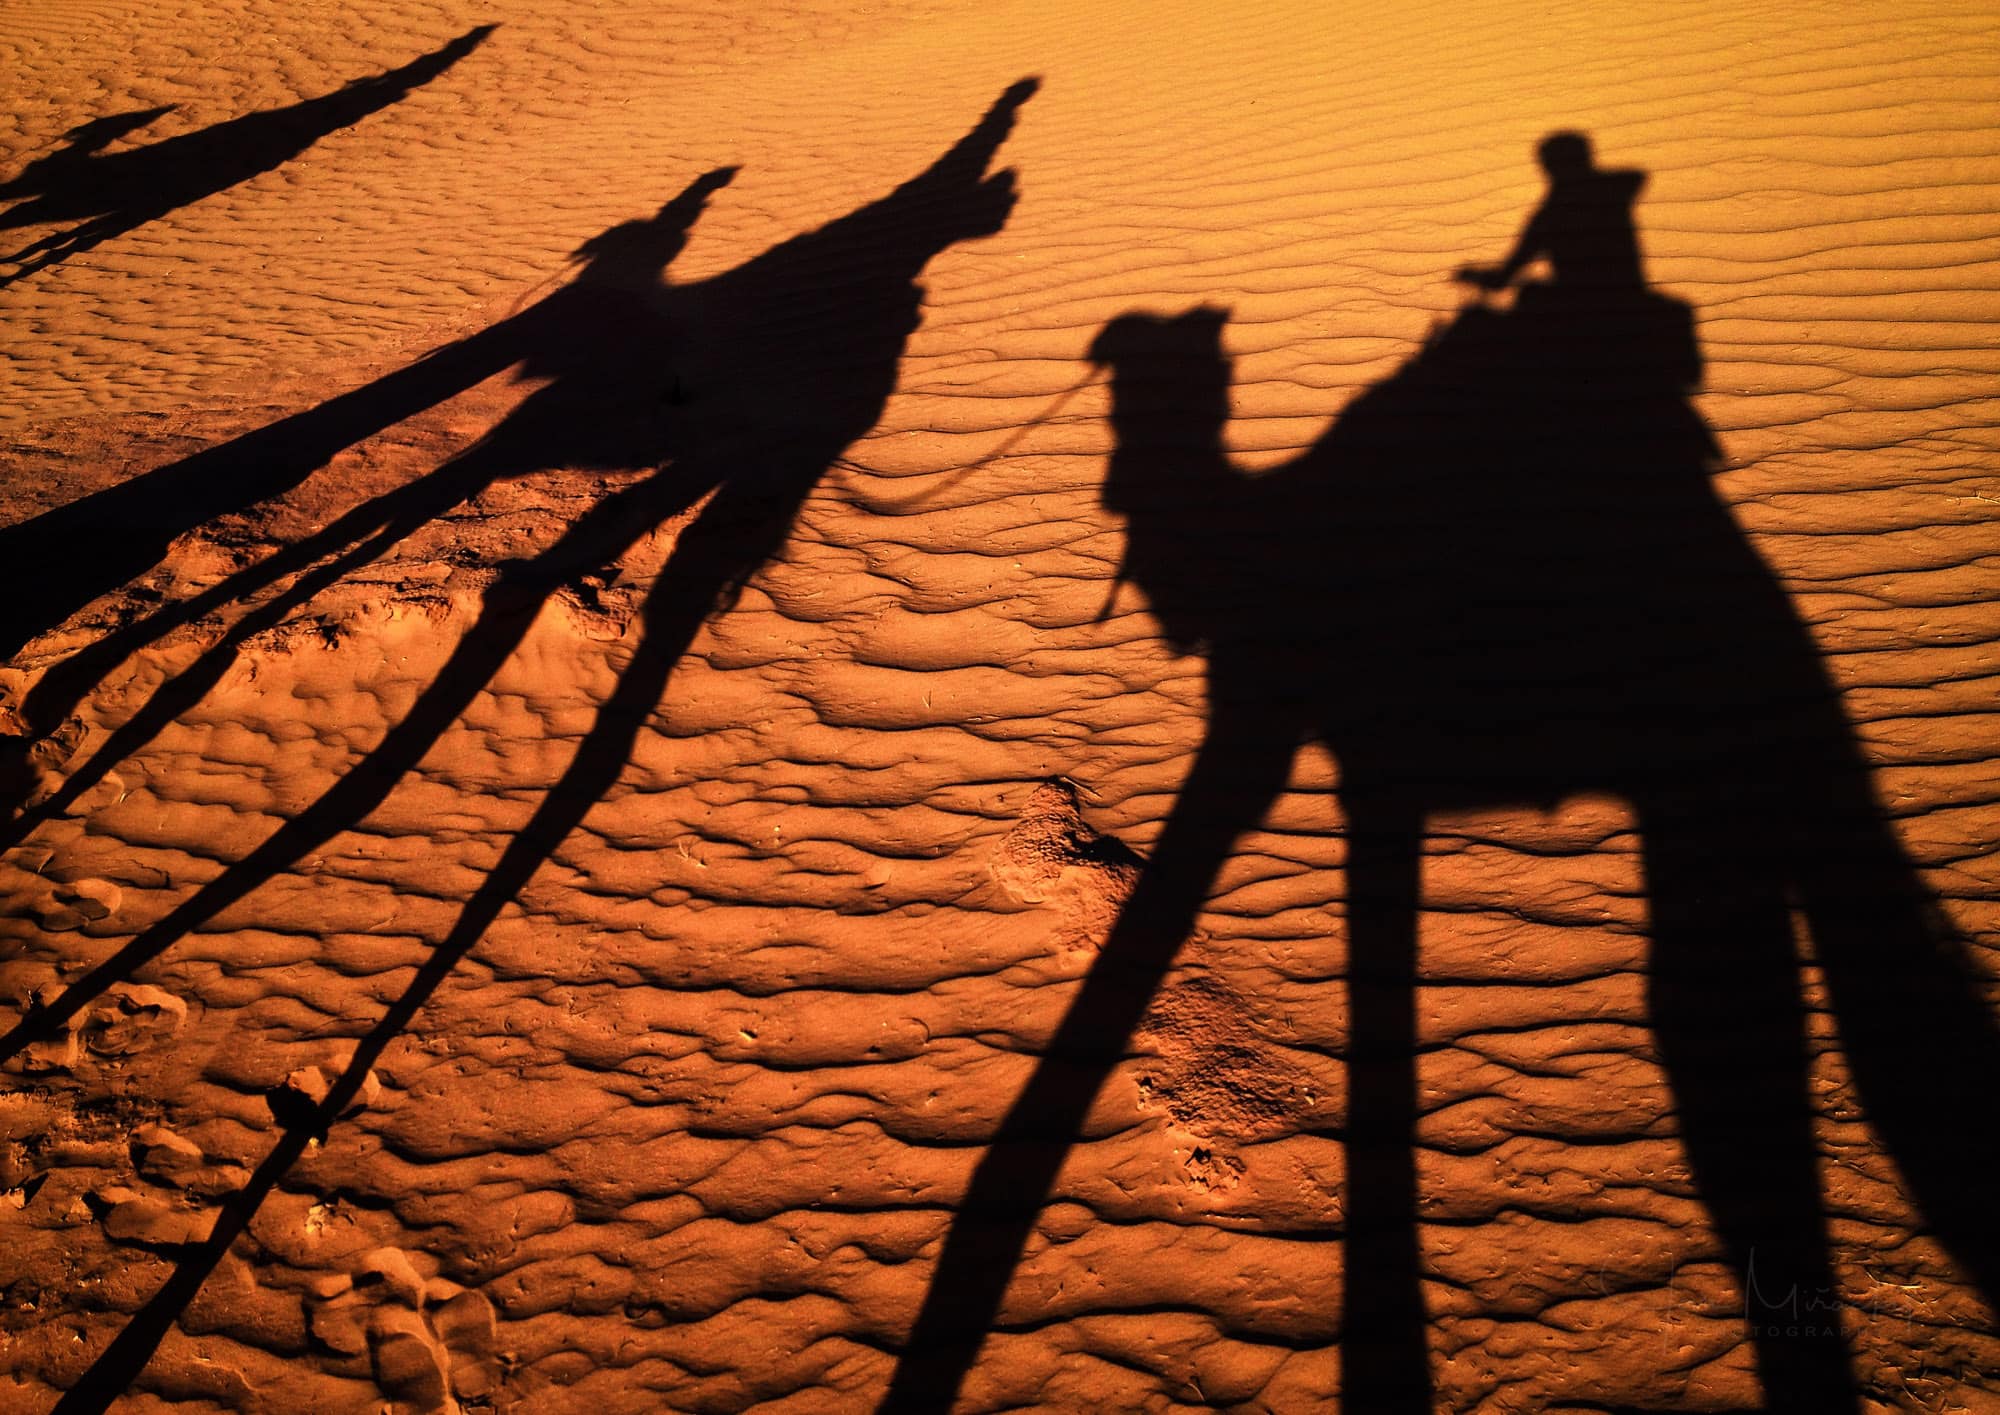 Shadow of camel caravana on Sahara desert